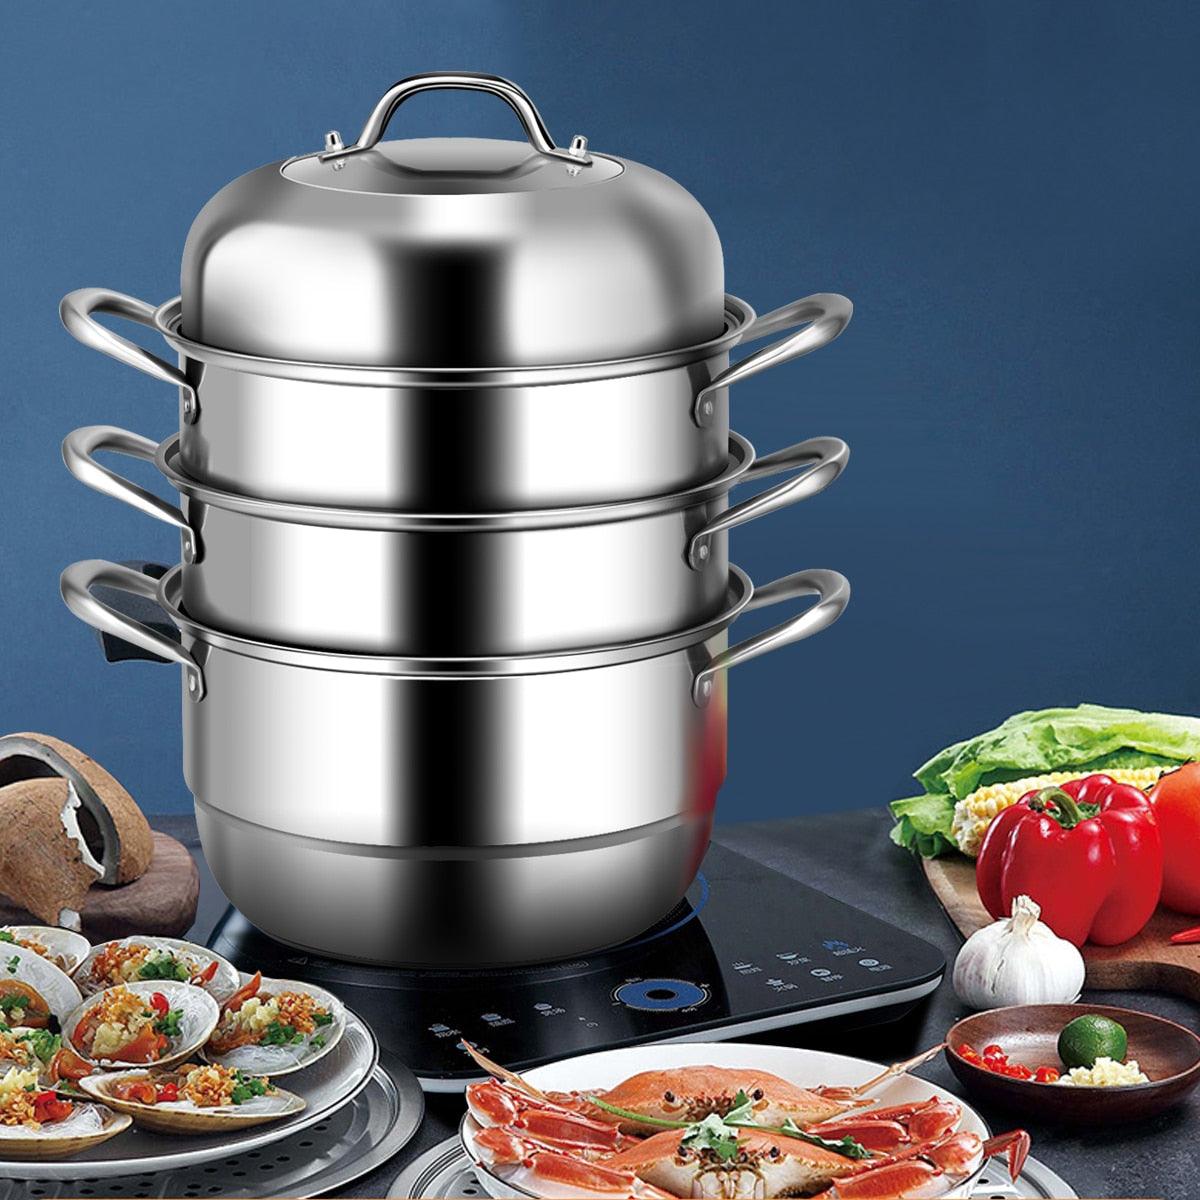 Costway 3 Tier 11 Inch Stainless Steel Steamer Set Cookware Pot Sauce pot Double Boiler (AK1)(1U61)